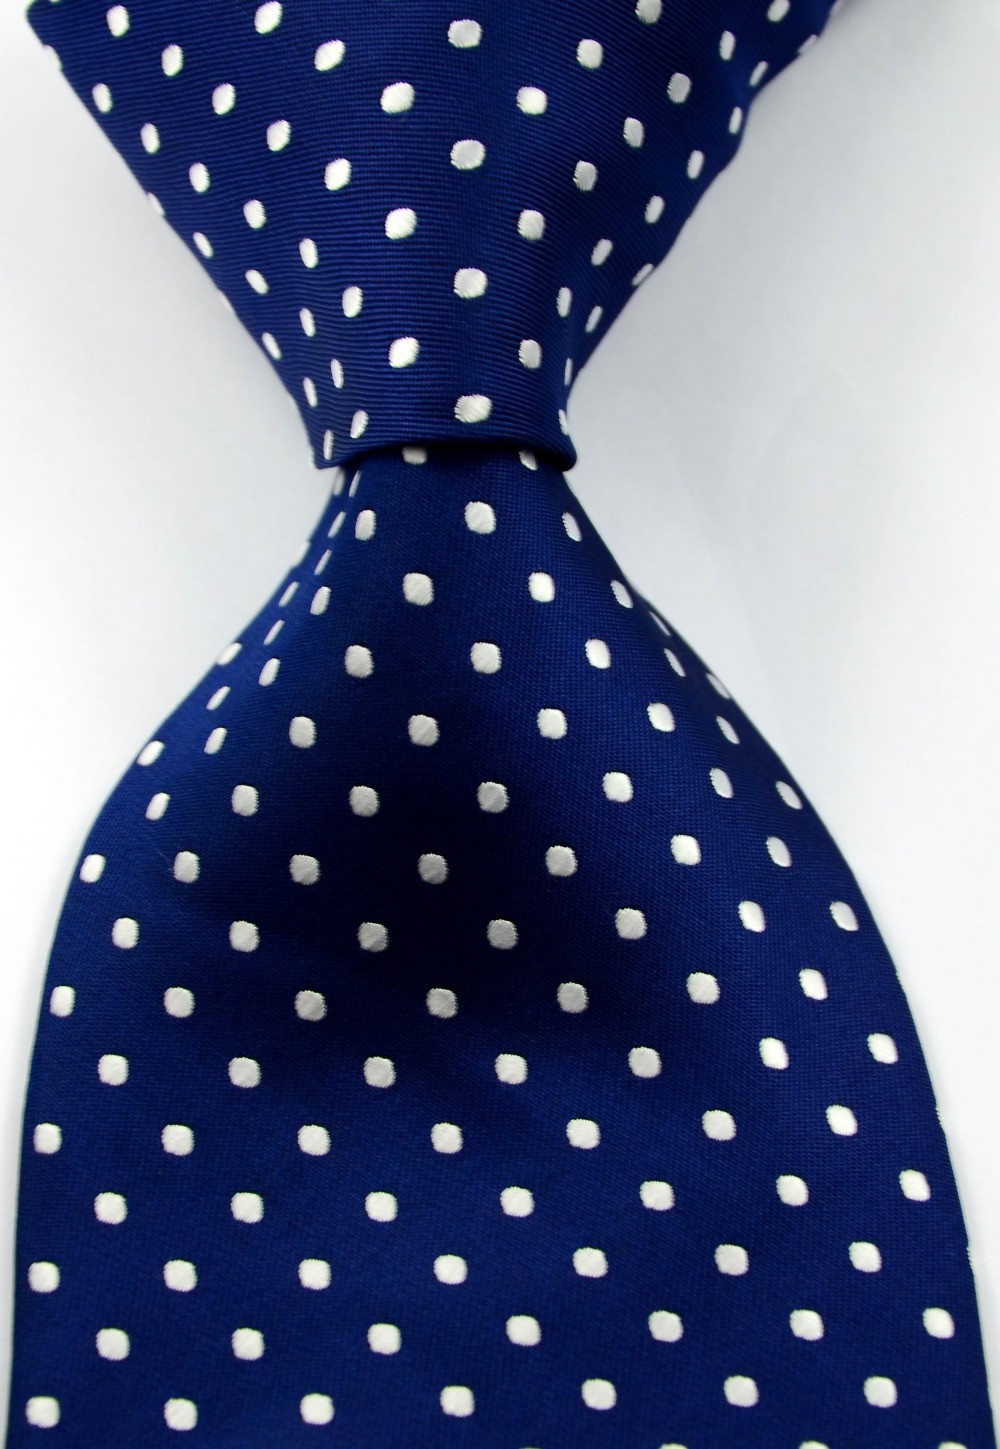 colorful New Classic Polka Dot Blue White JACQUARD WOVEN Silk Men s Tie Necktie